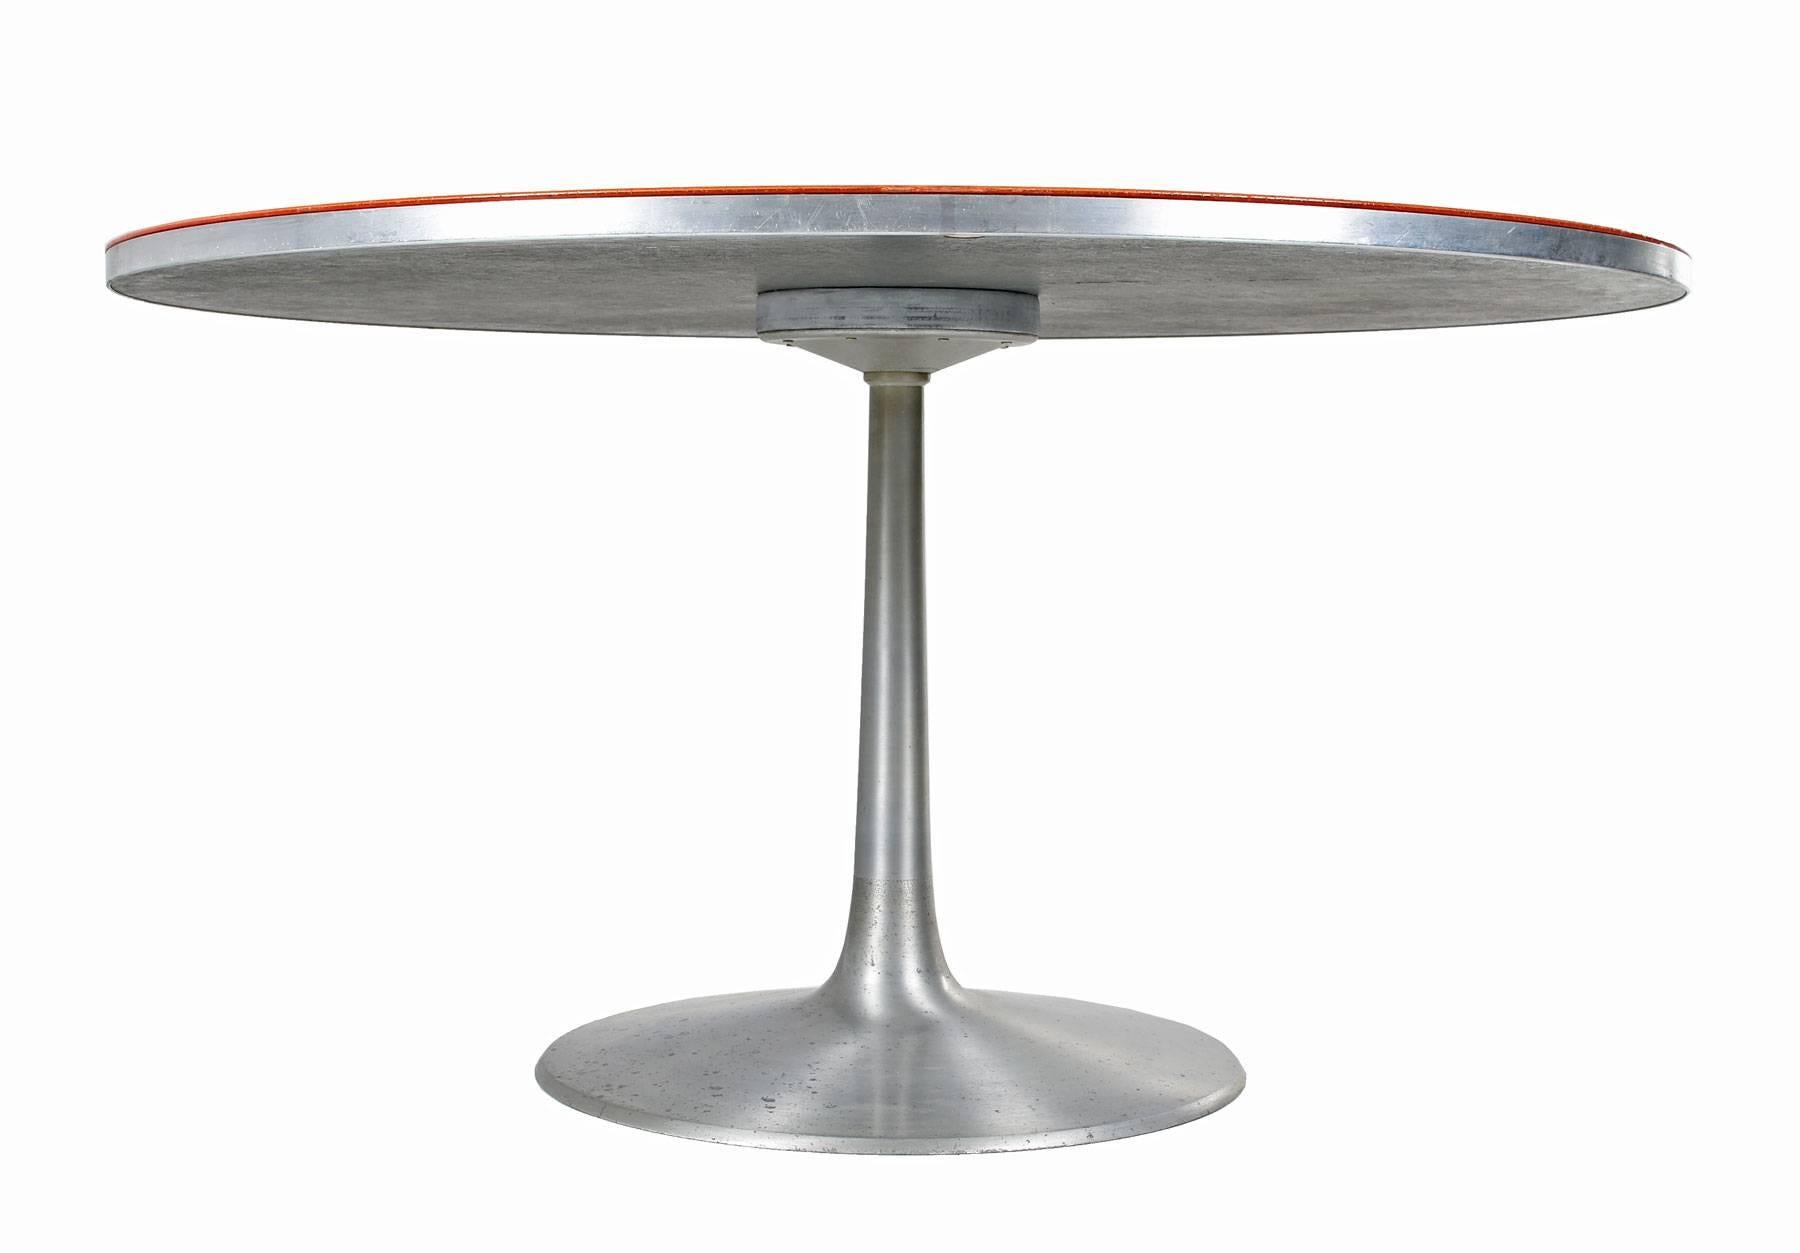 Danish Aluminium Dining Table Hand-Painted by Susanne Fjeldsøe for Poul Cadovius, 1960s